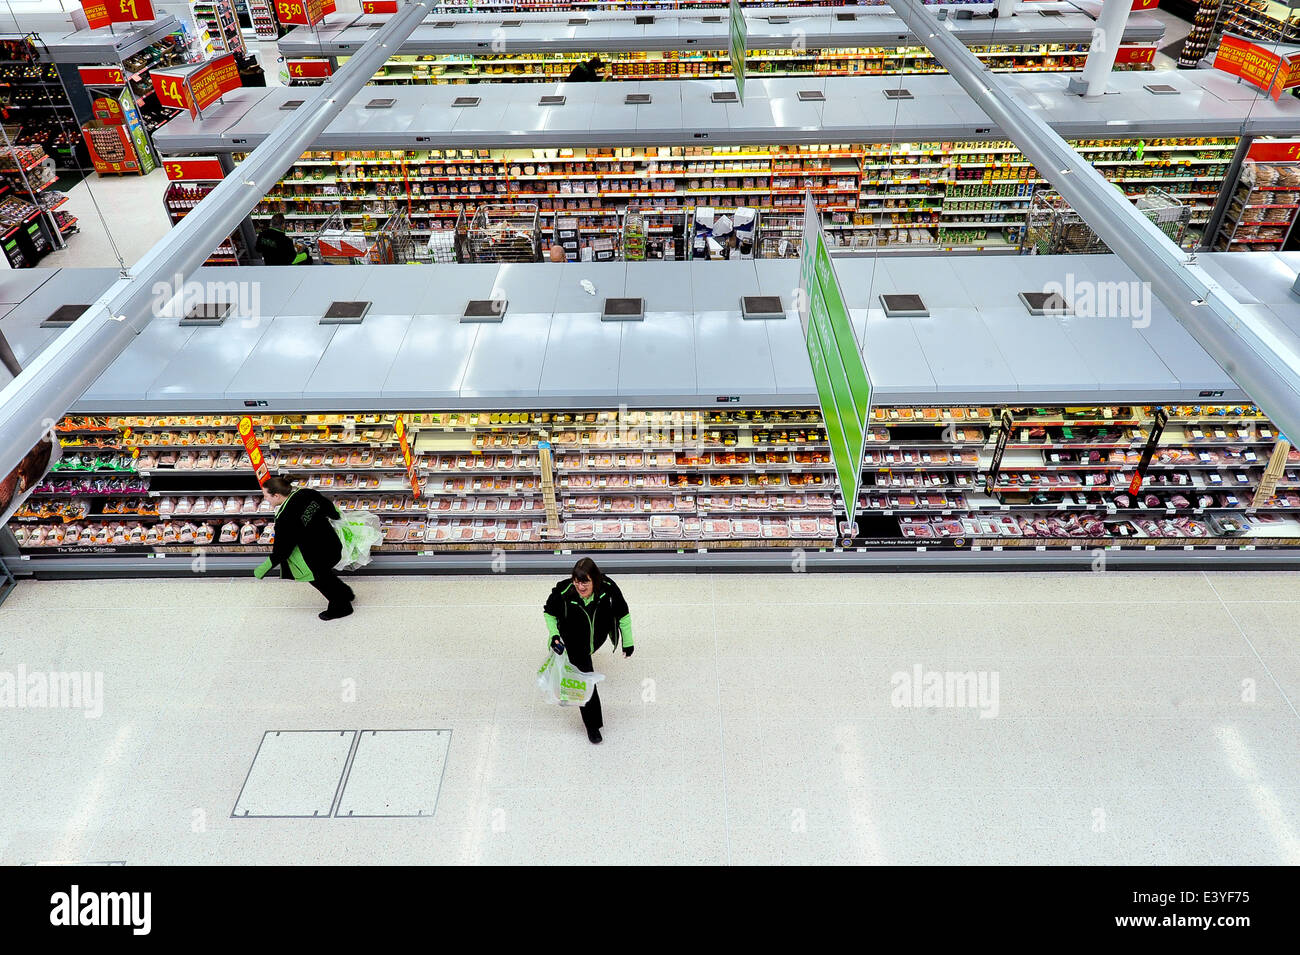 asda supermarket interior Stock Photo